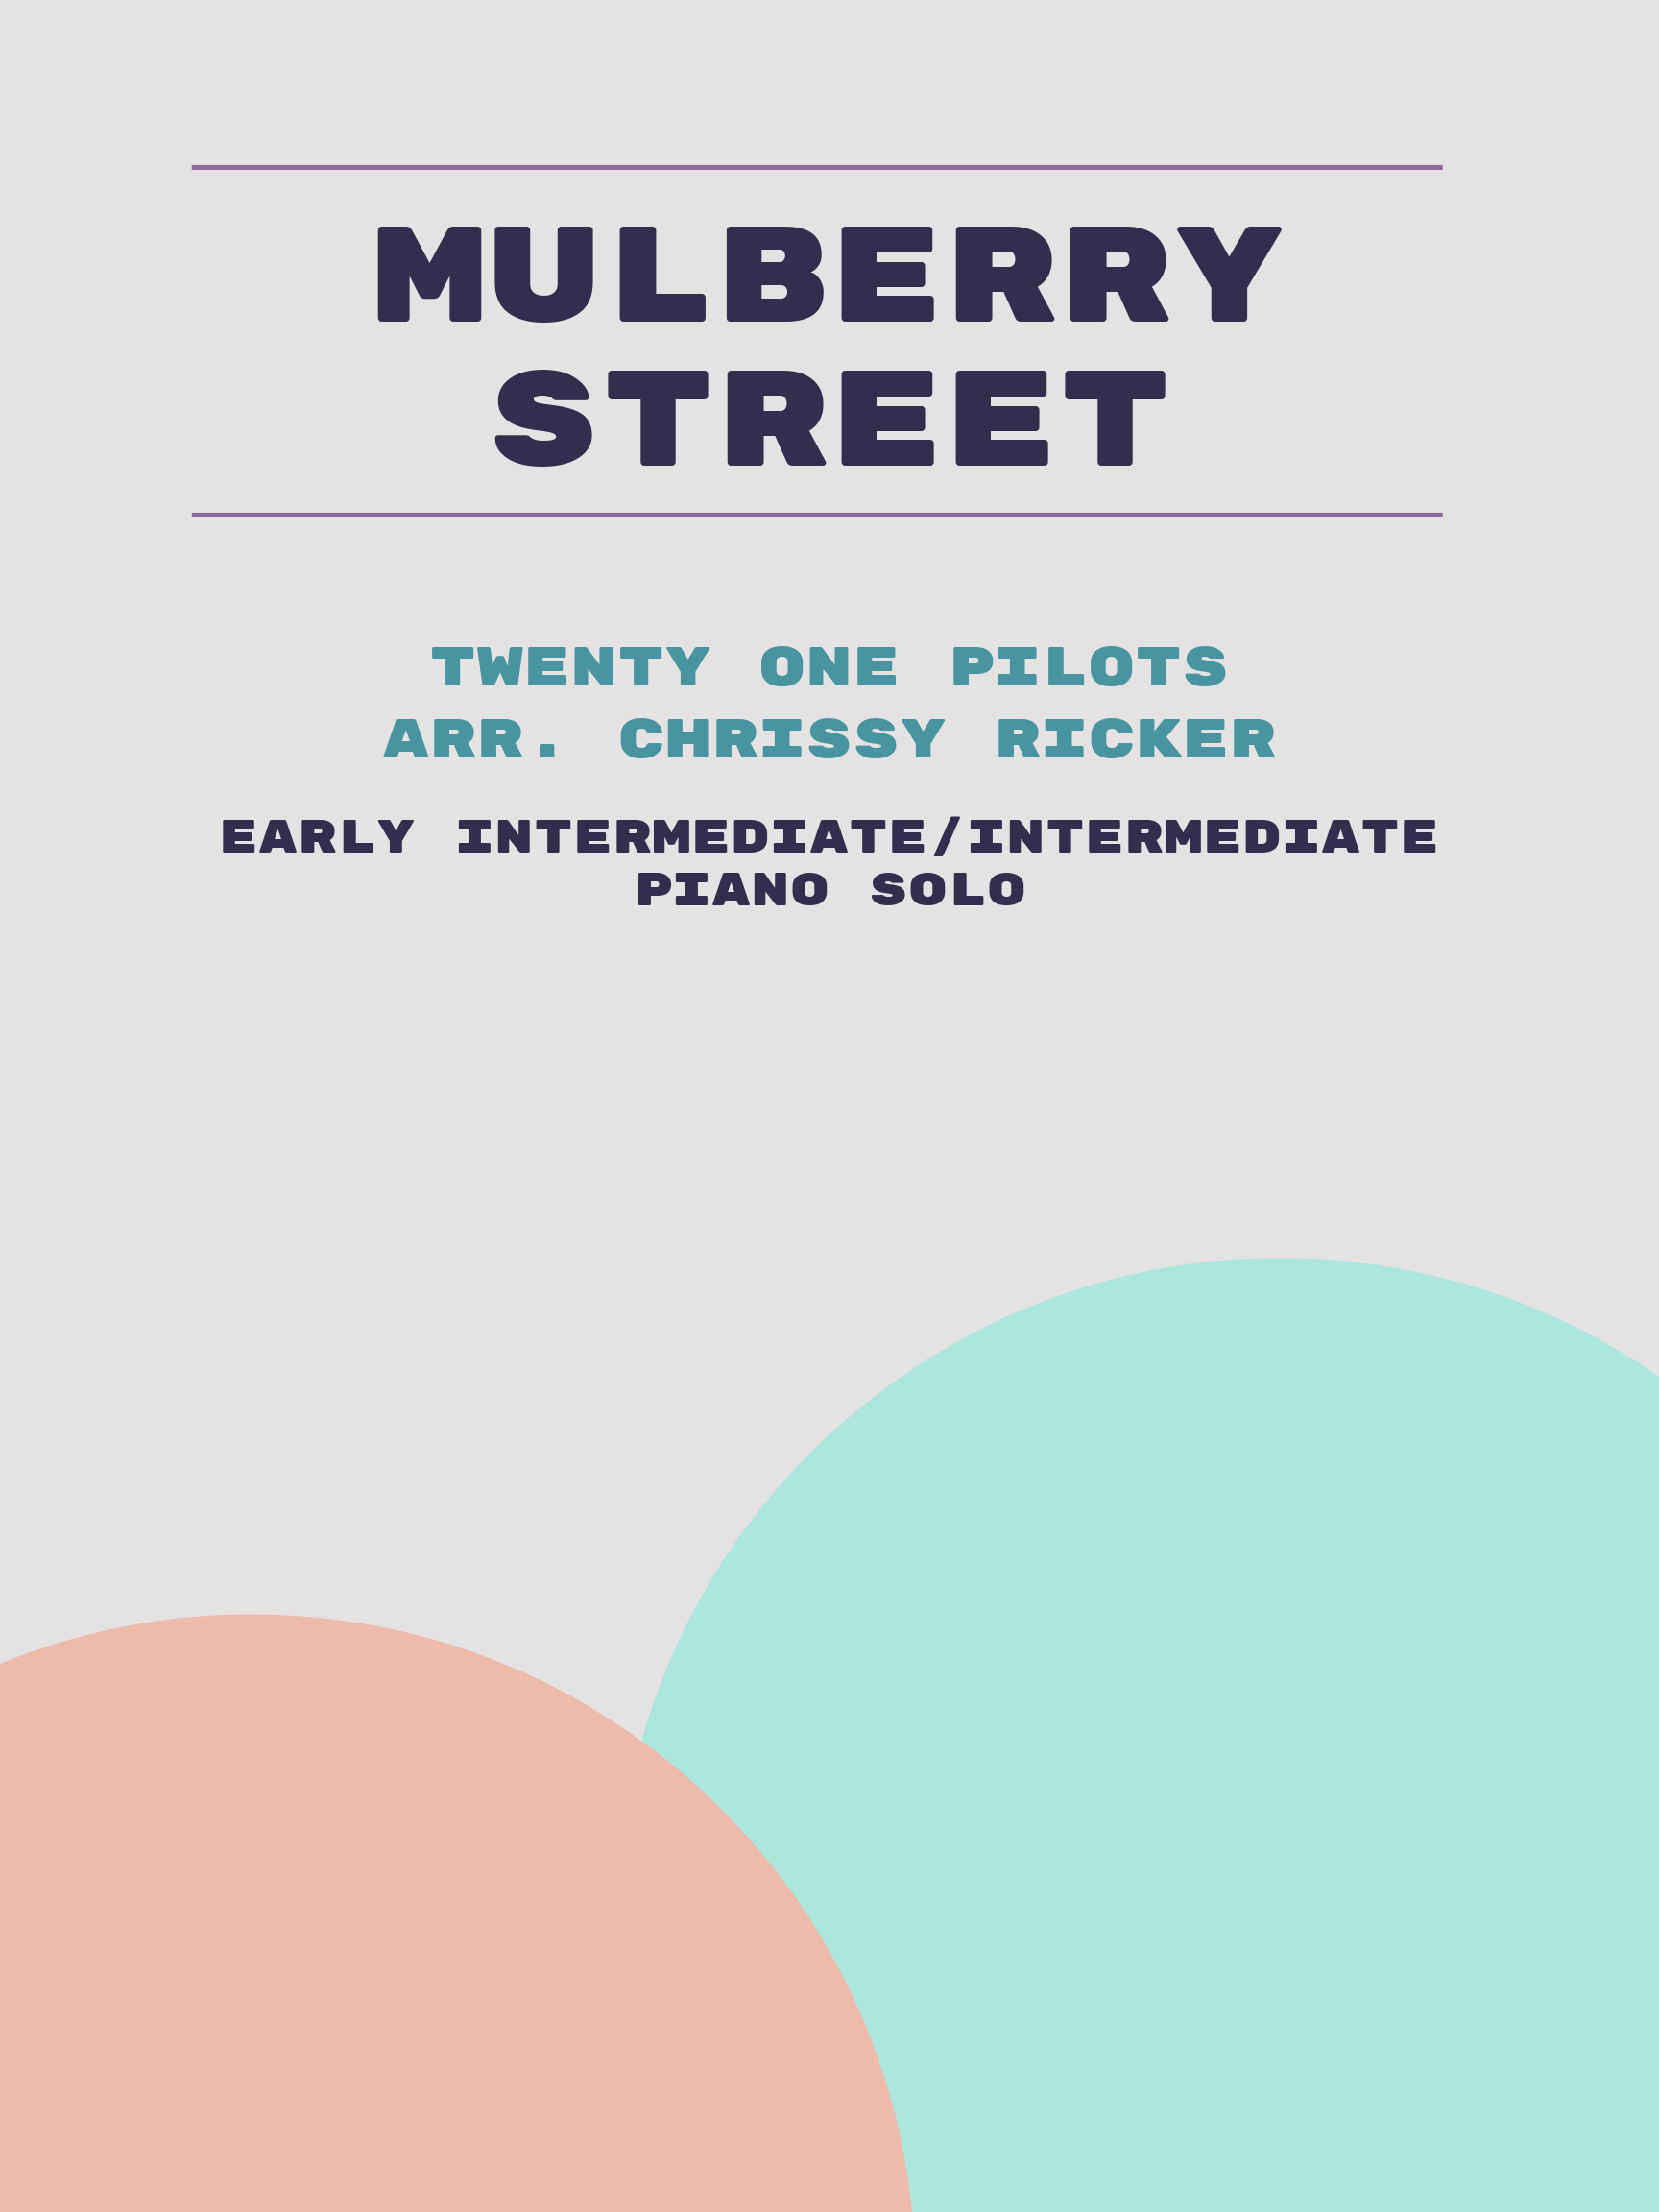 Mulberry Street by Twenty One Pilots